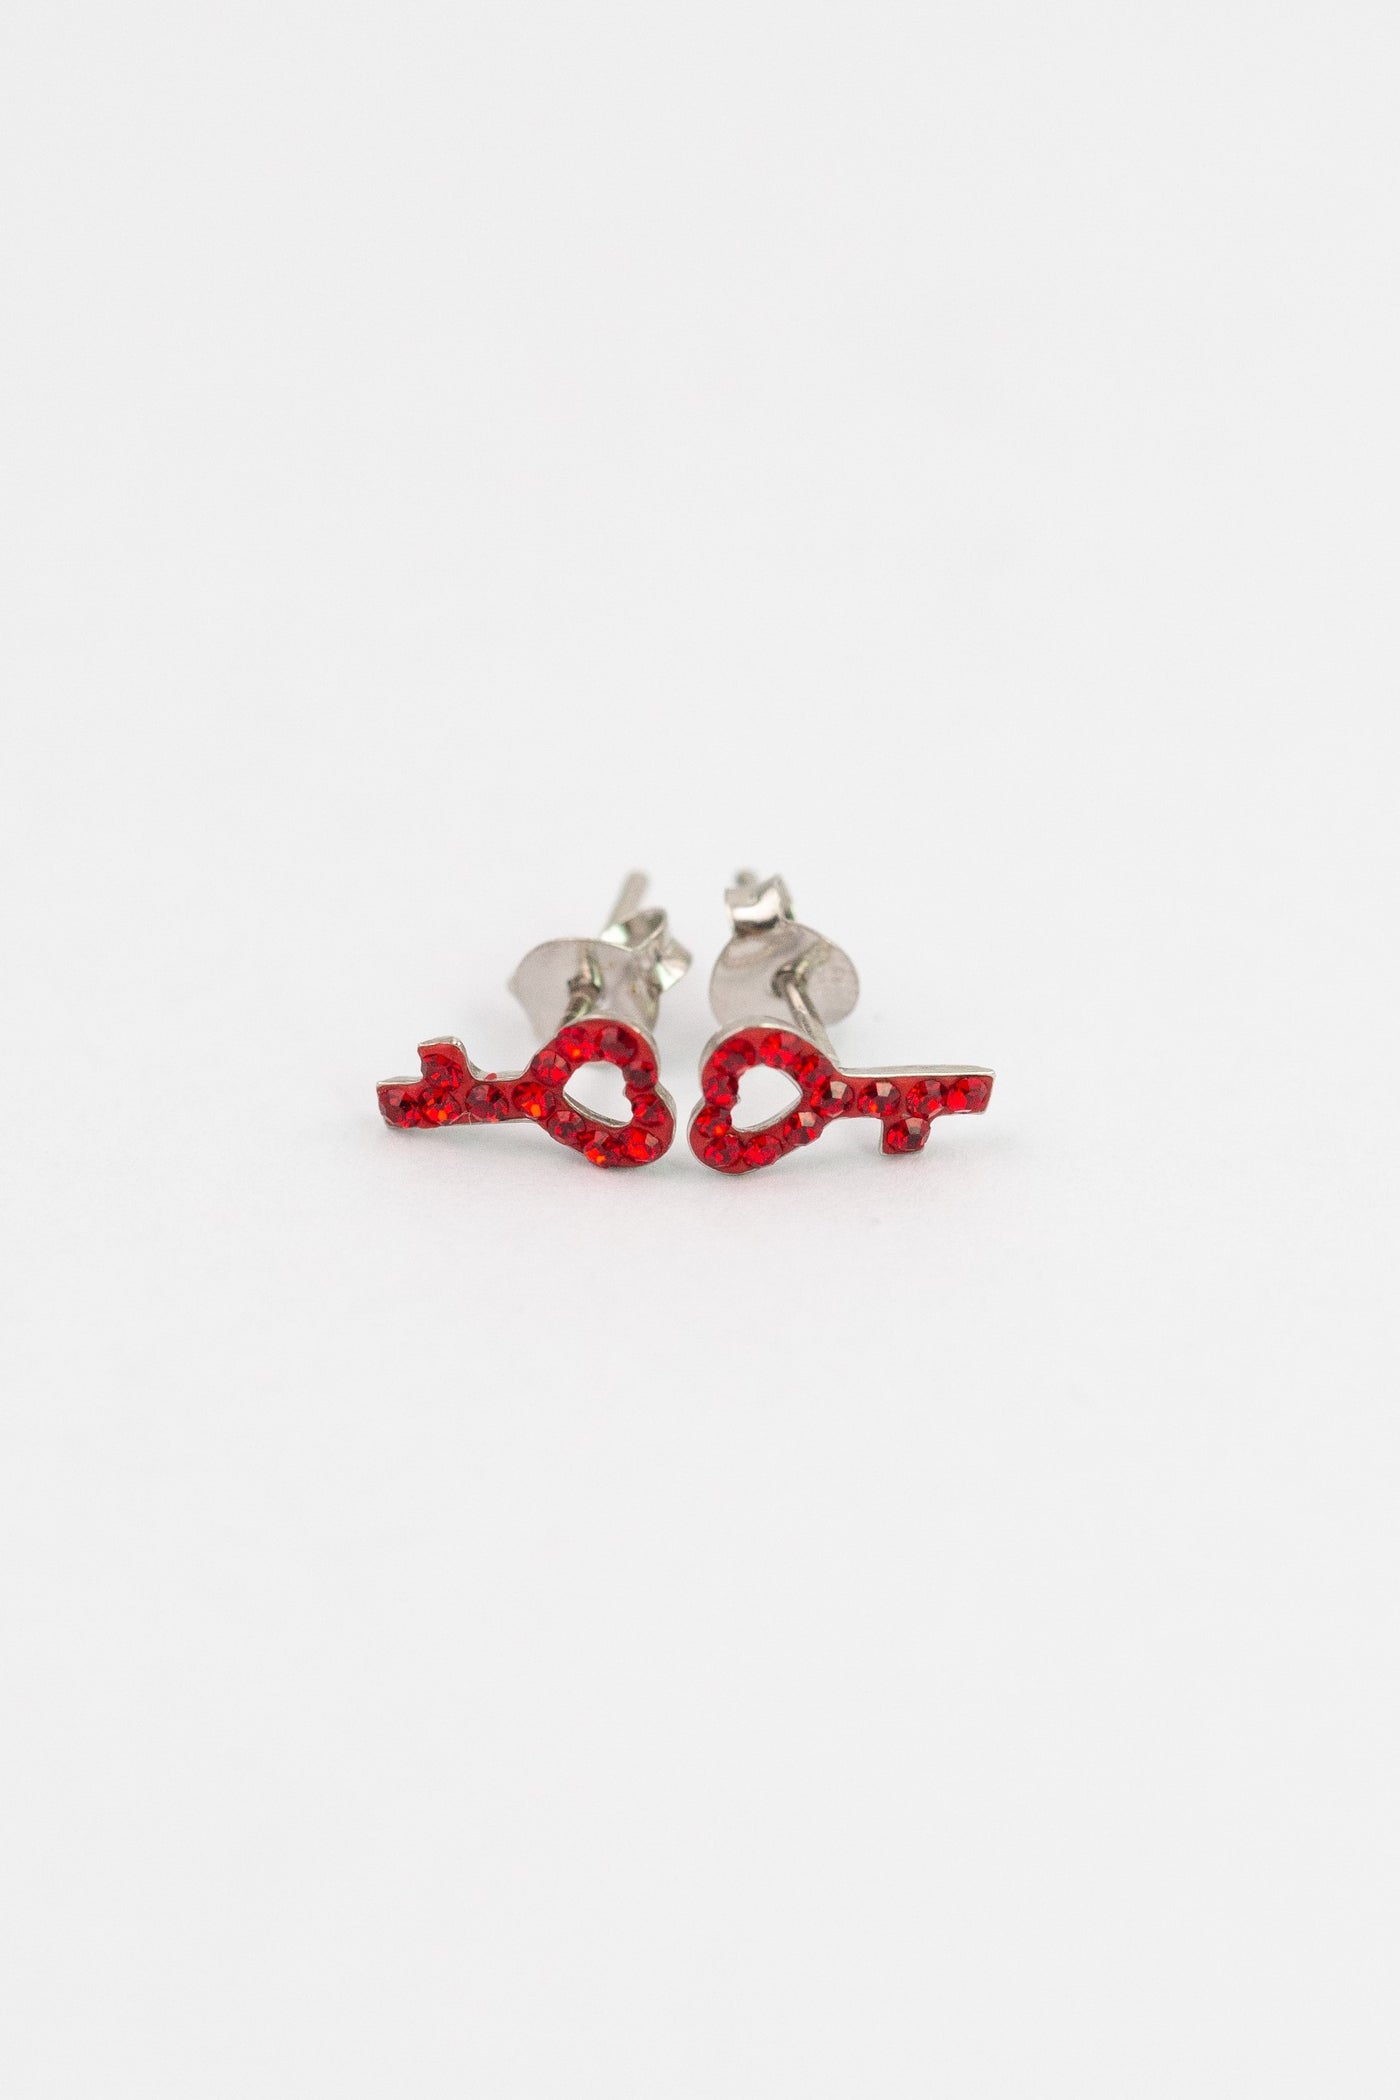 Open Heart Key Crystal Sterling Silver Stud Earrings in Siam Red | Annie and Sisters | sister stud earrings, for kids, children's jewelry, kid's jewelry, best friend